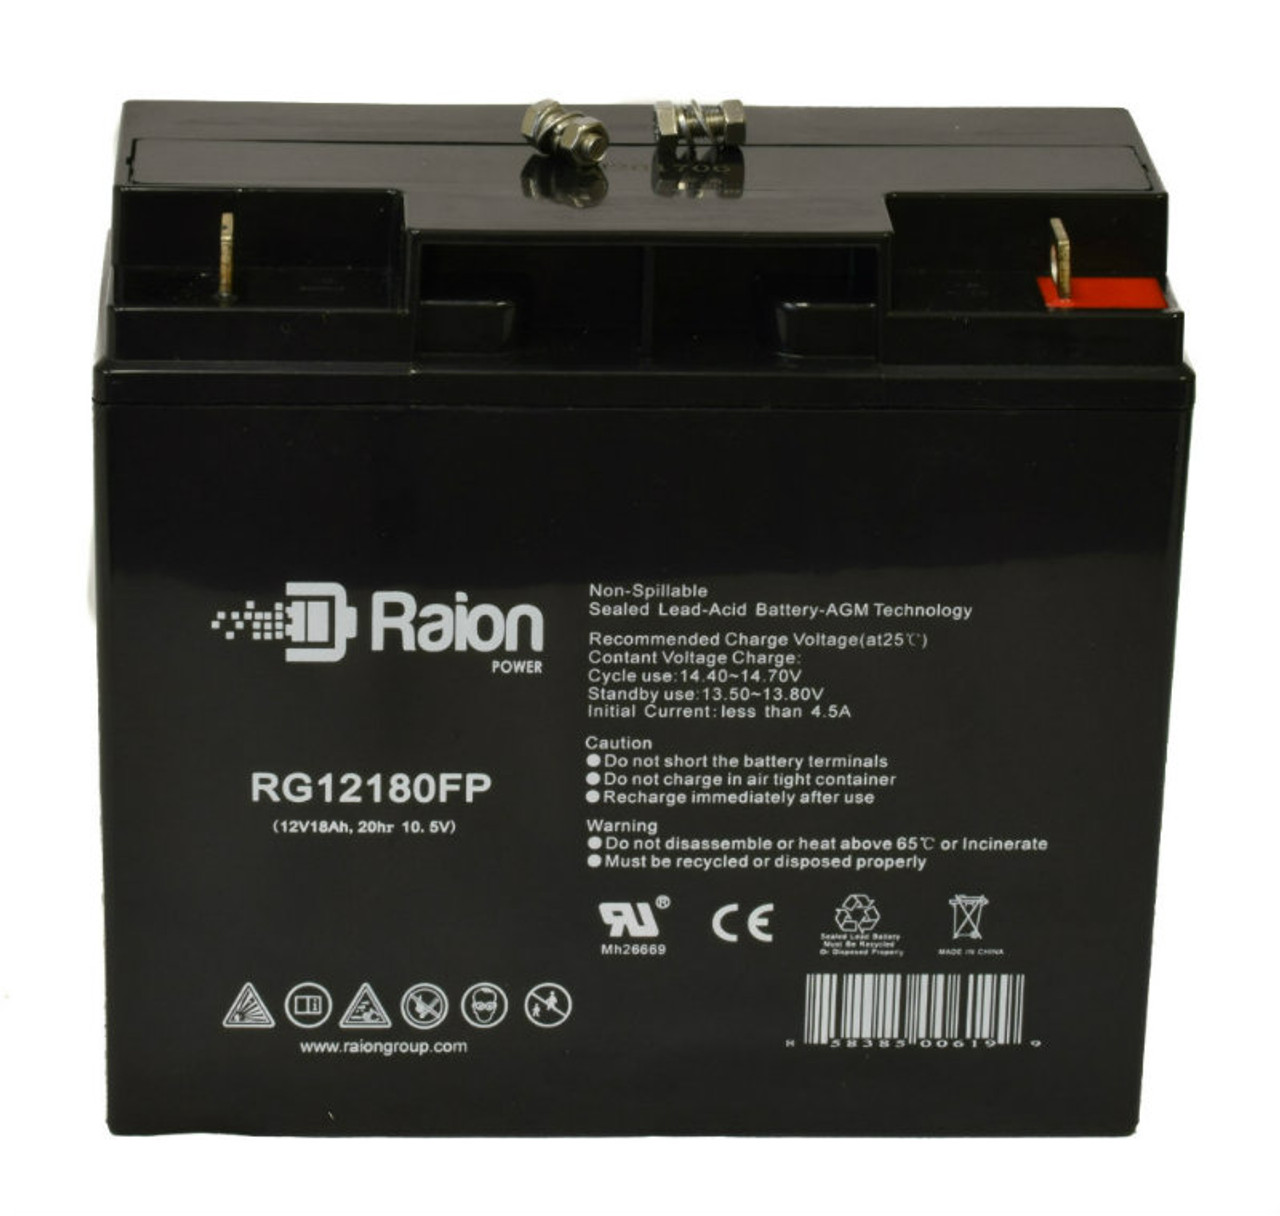 Raion Power RG12180FP 12V 18Ah Lead Acid Battery for Unibo GB12-17